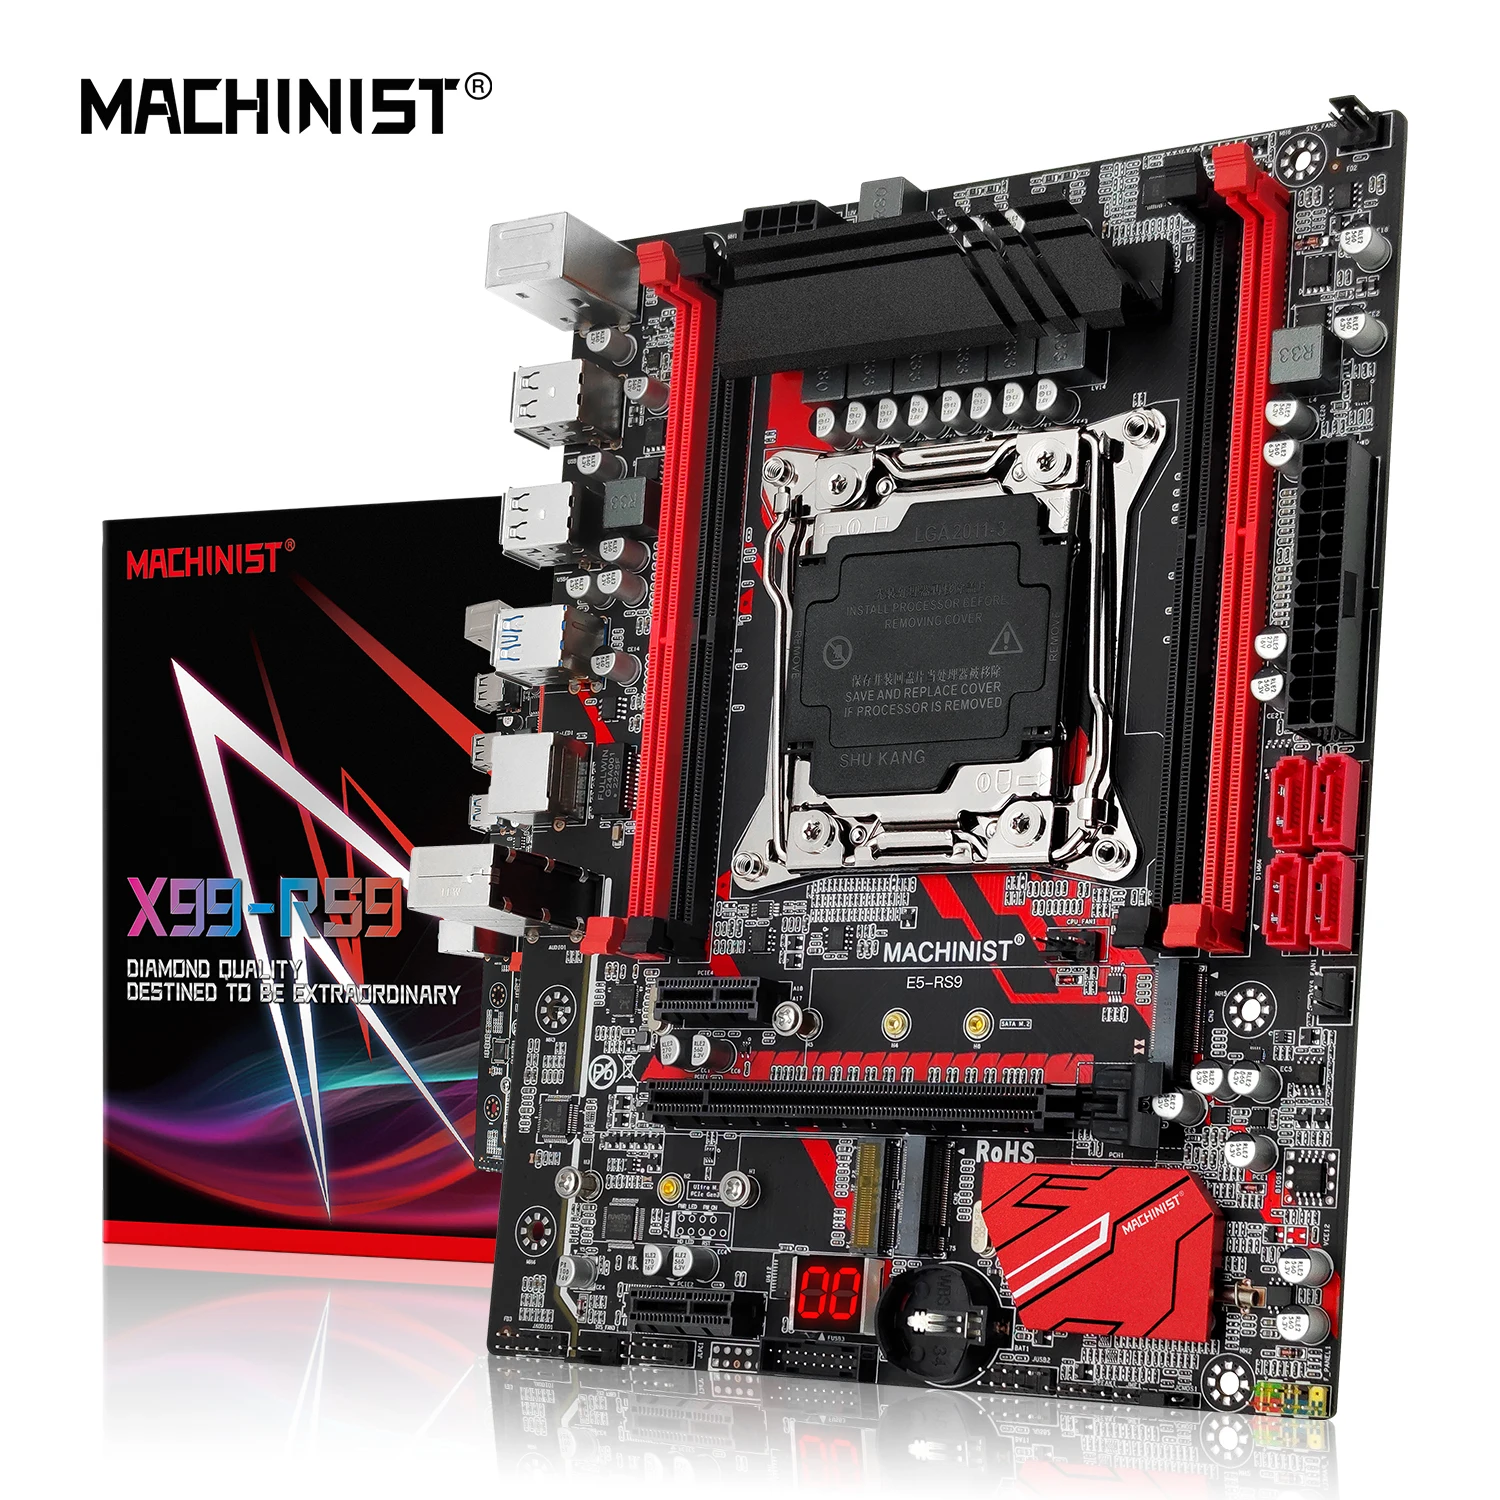 MACHINIST-placa base X99 RS9, LGA 2011-3, compatible con Intel Xeon E5 2666 2667 2670 V3 V4 DDR4, memoria RAM SATA M.2 NVME, cuatro canales